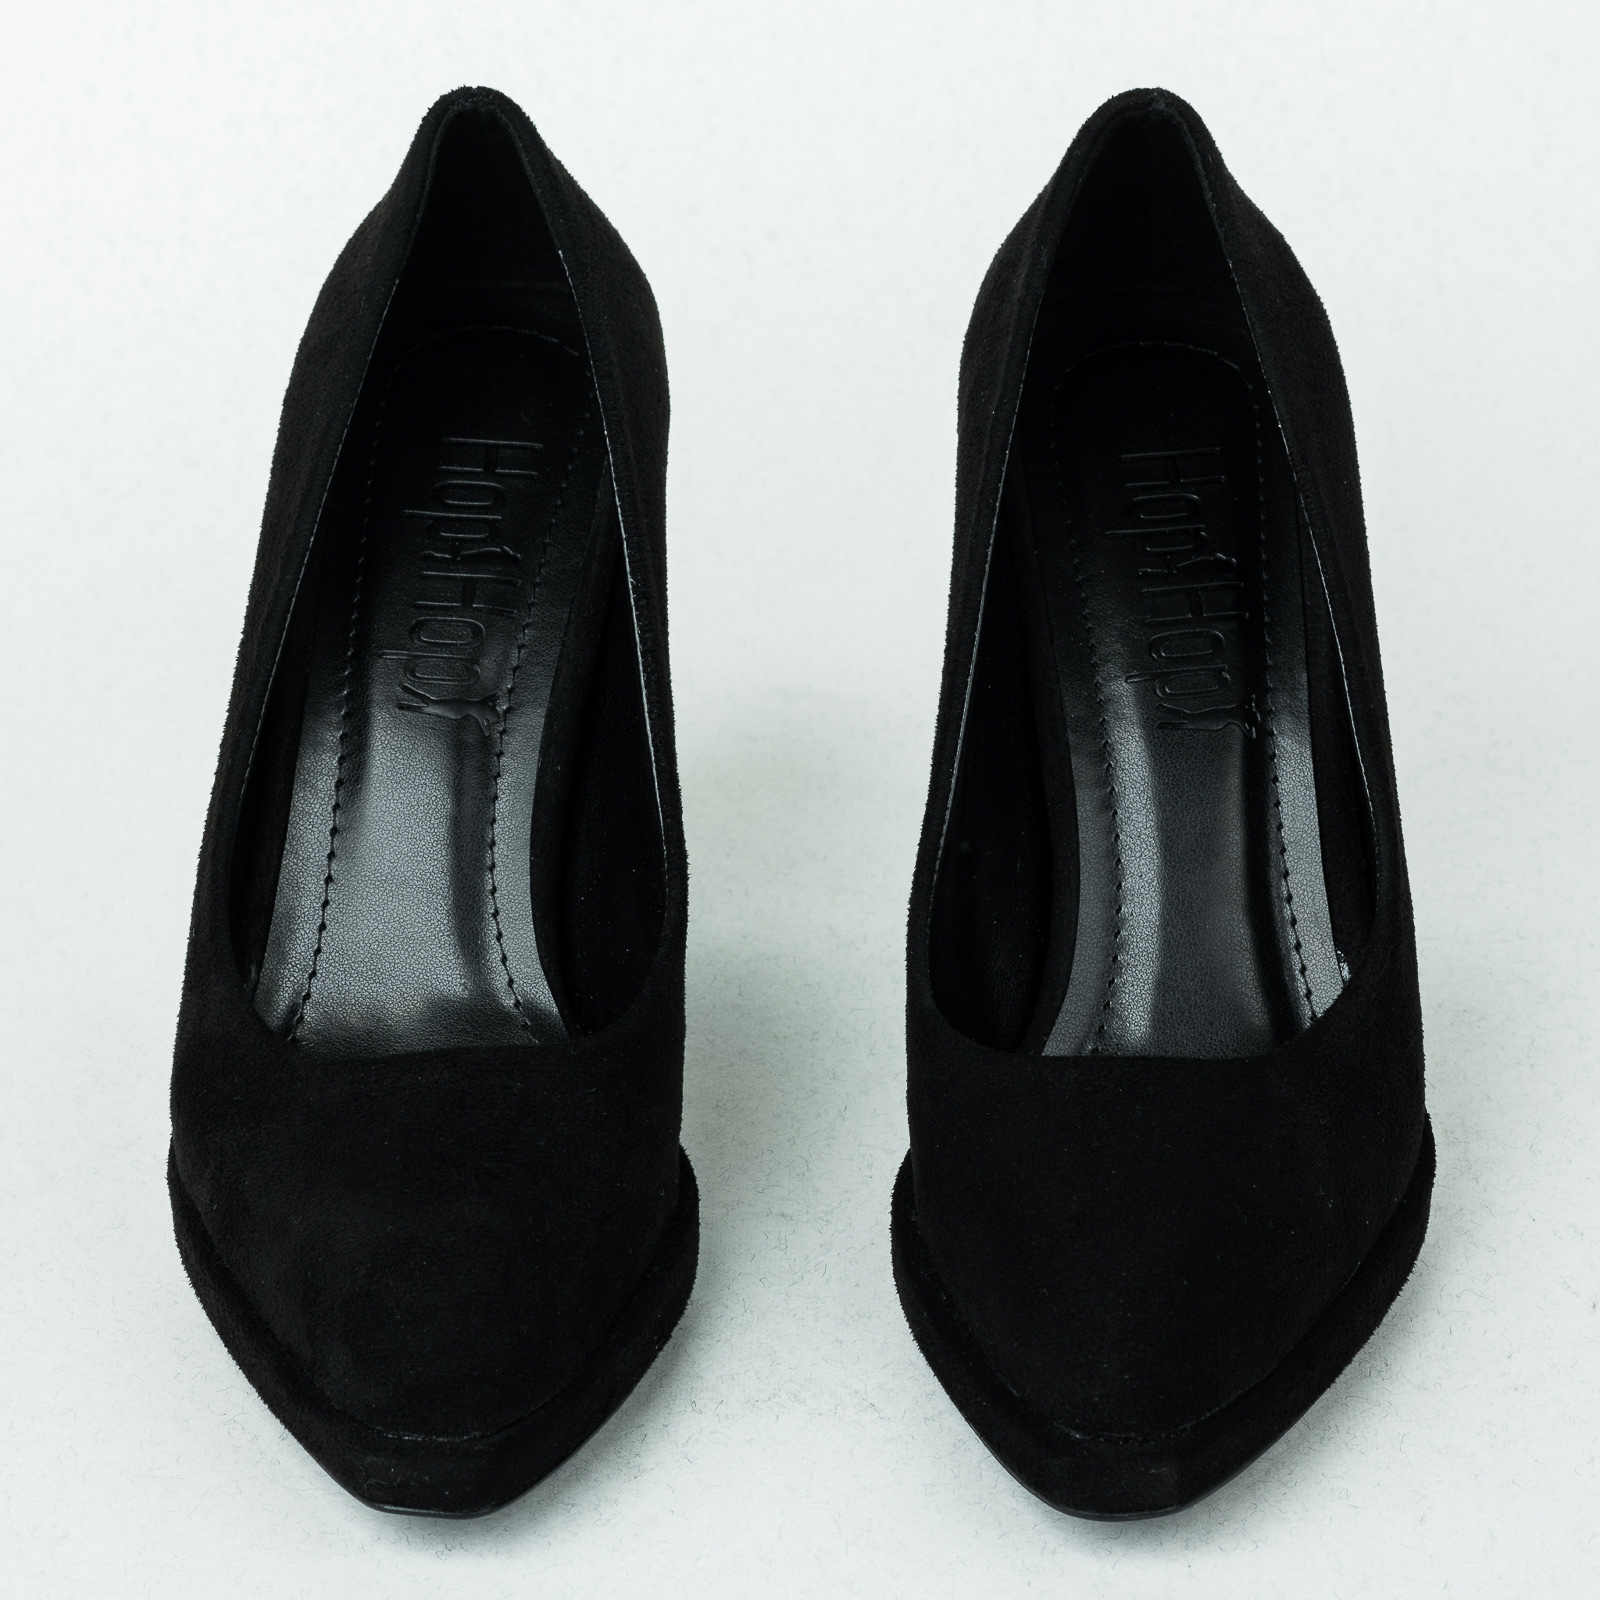 High-heels B256 - BLACK